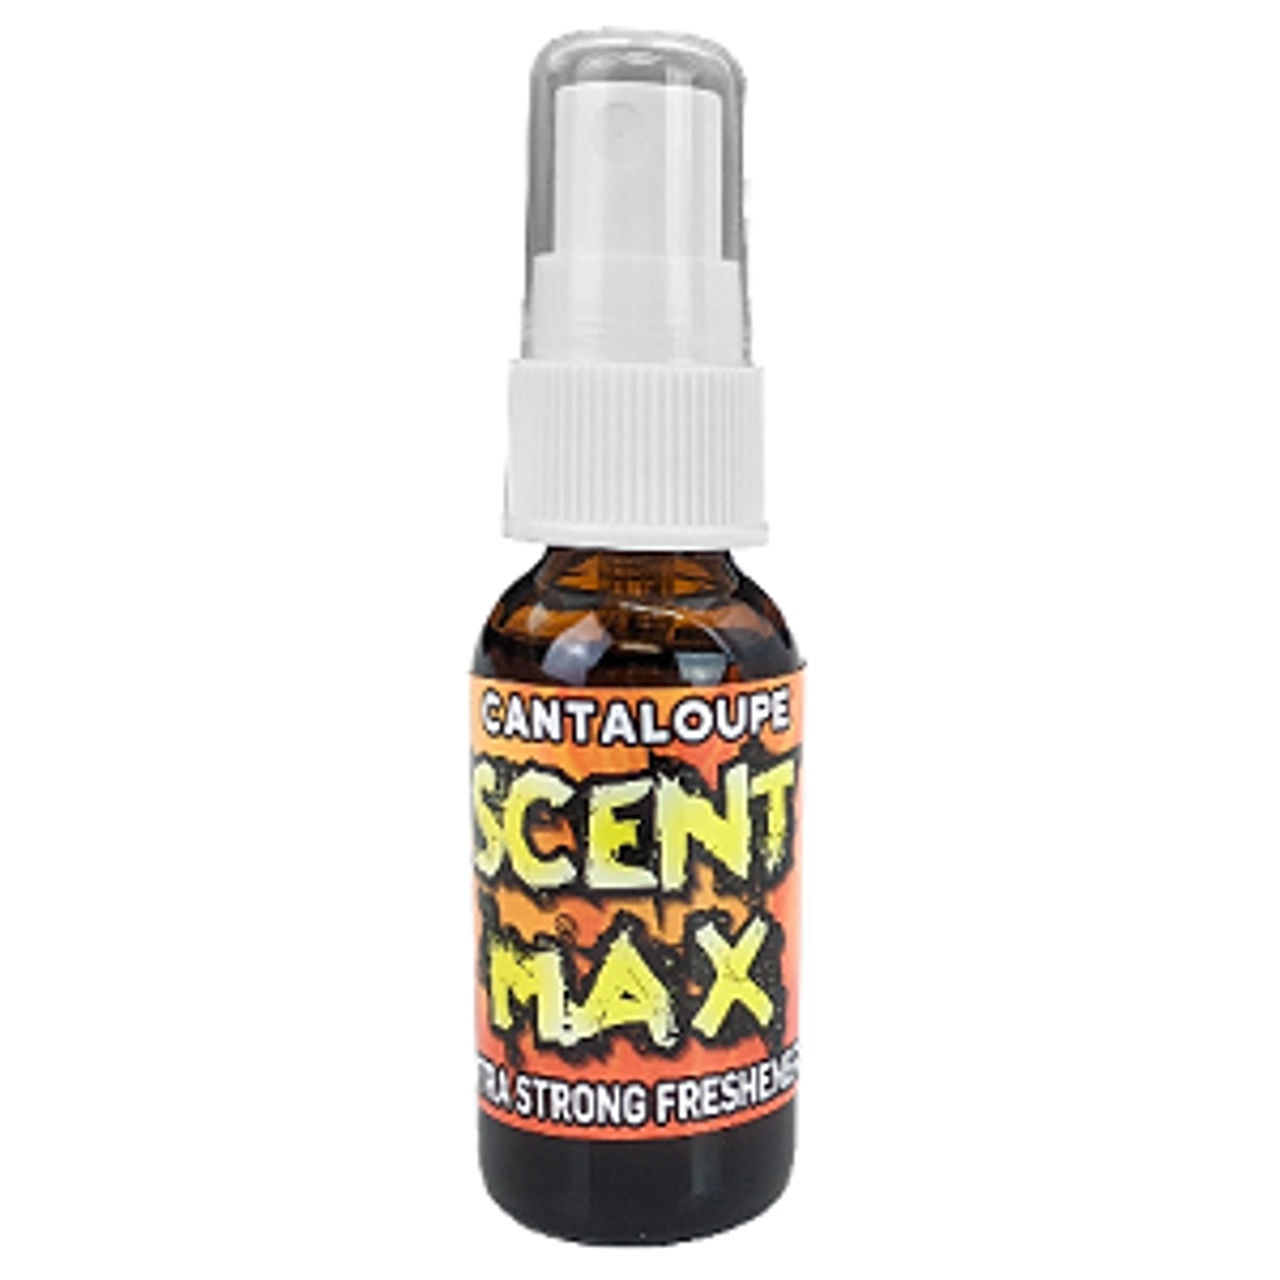 Scent Max  Cantaloupe Spray 1oz bottle